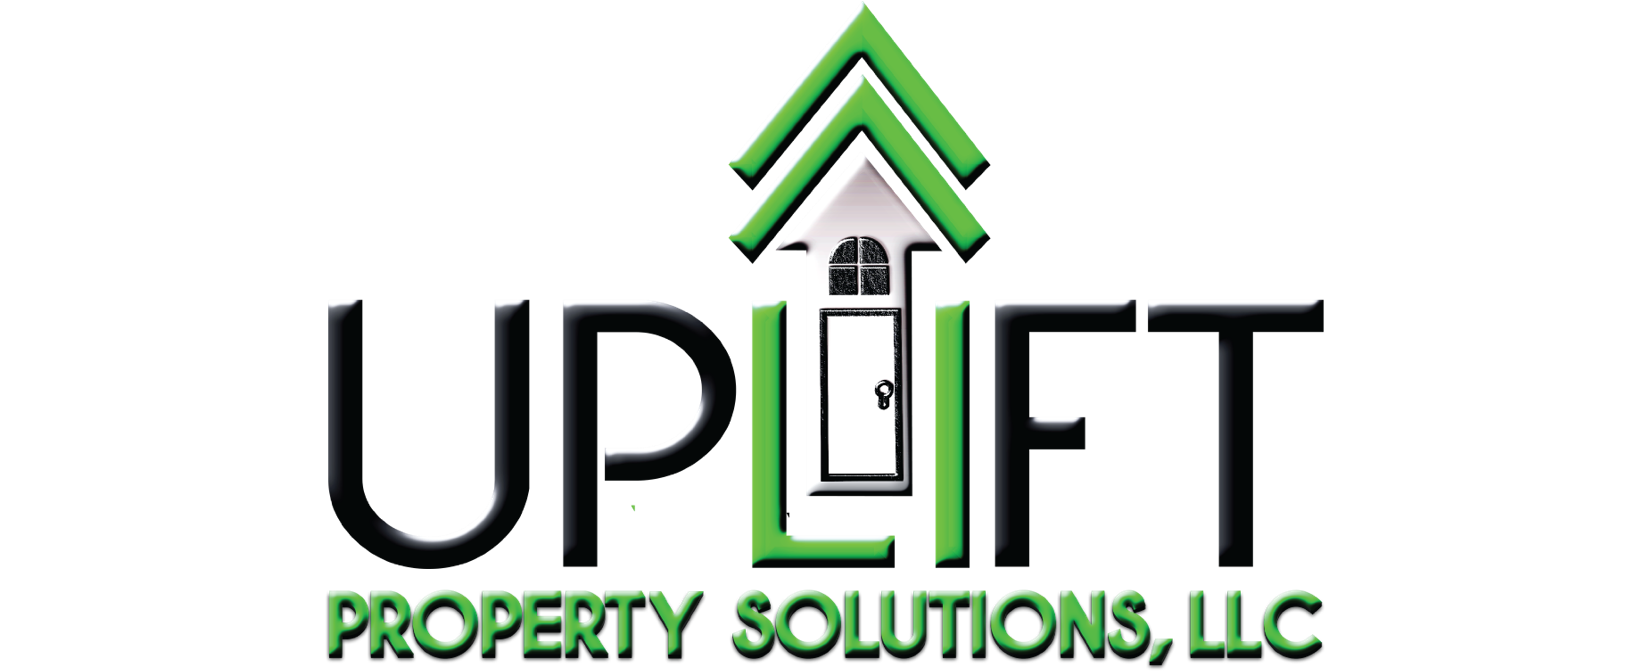 Uplift Property Solutions, LLC